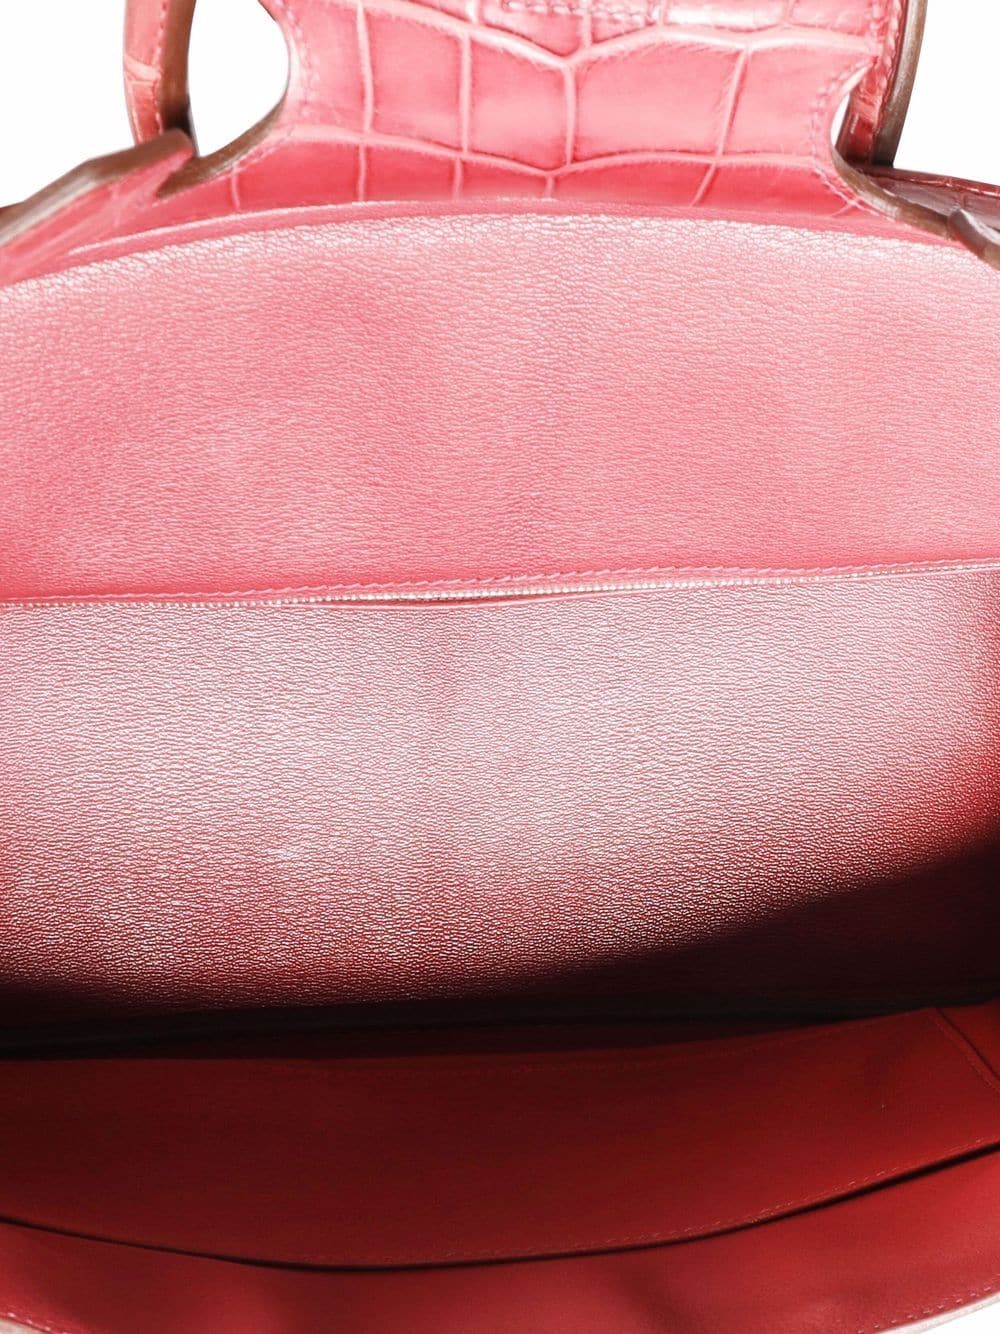 Hermès Birkin 35 Beige Leather Handbag (Pre-Owned)